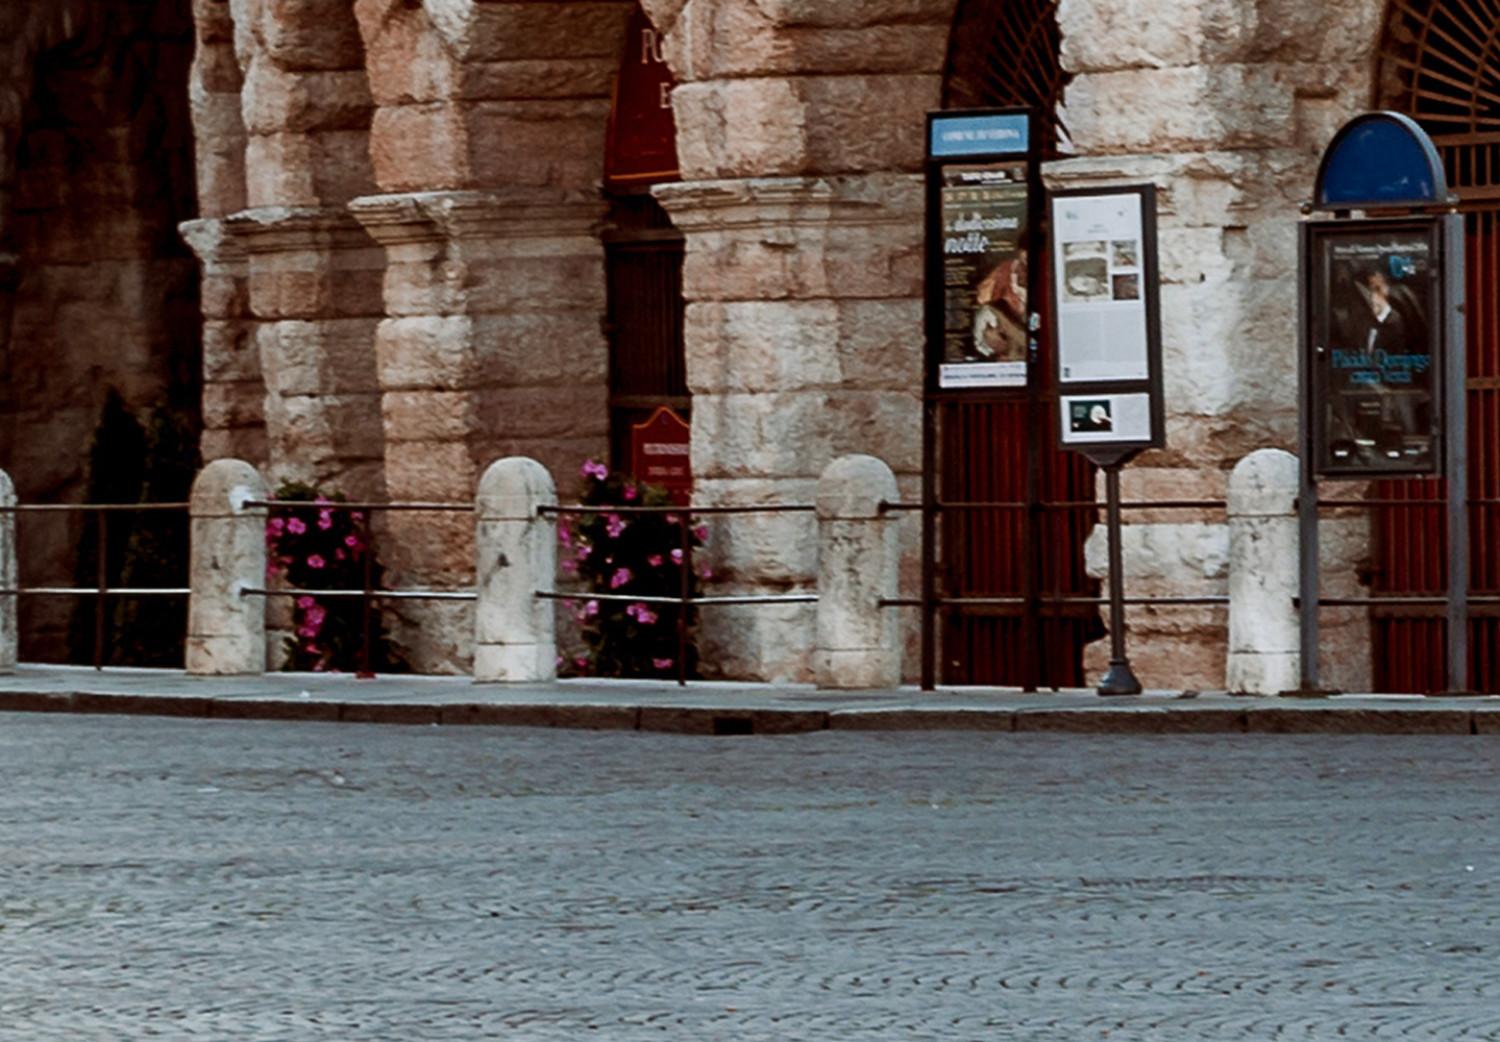 Cuadro decorativo Anfiteatro de Verona - foto de la arquitectura italiana al sol